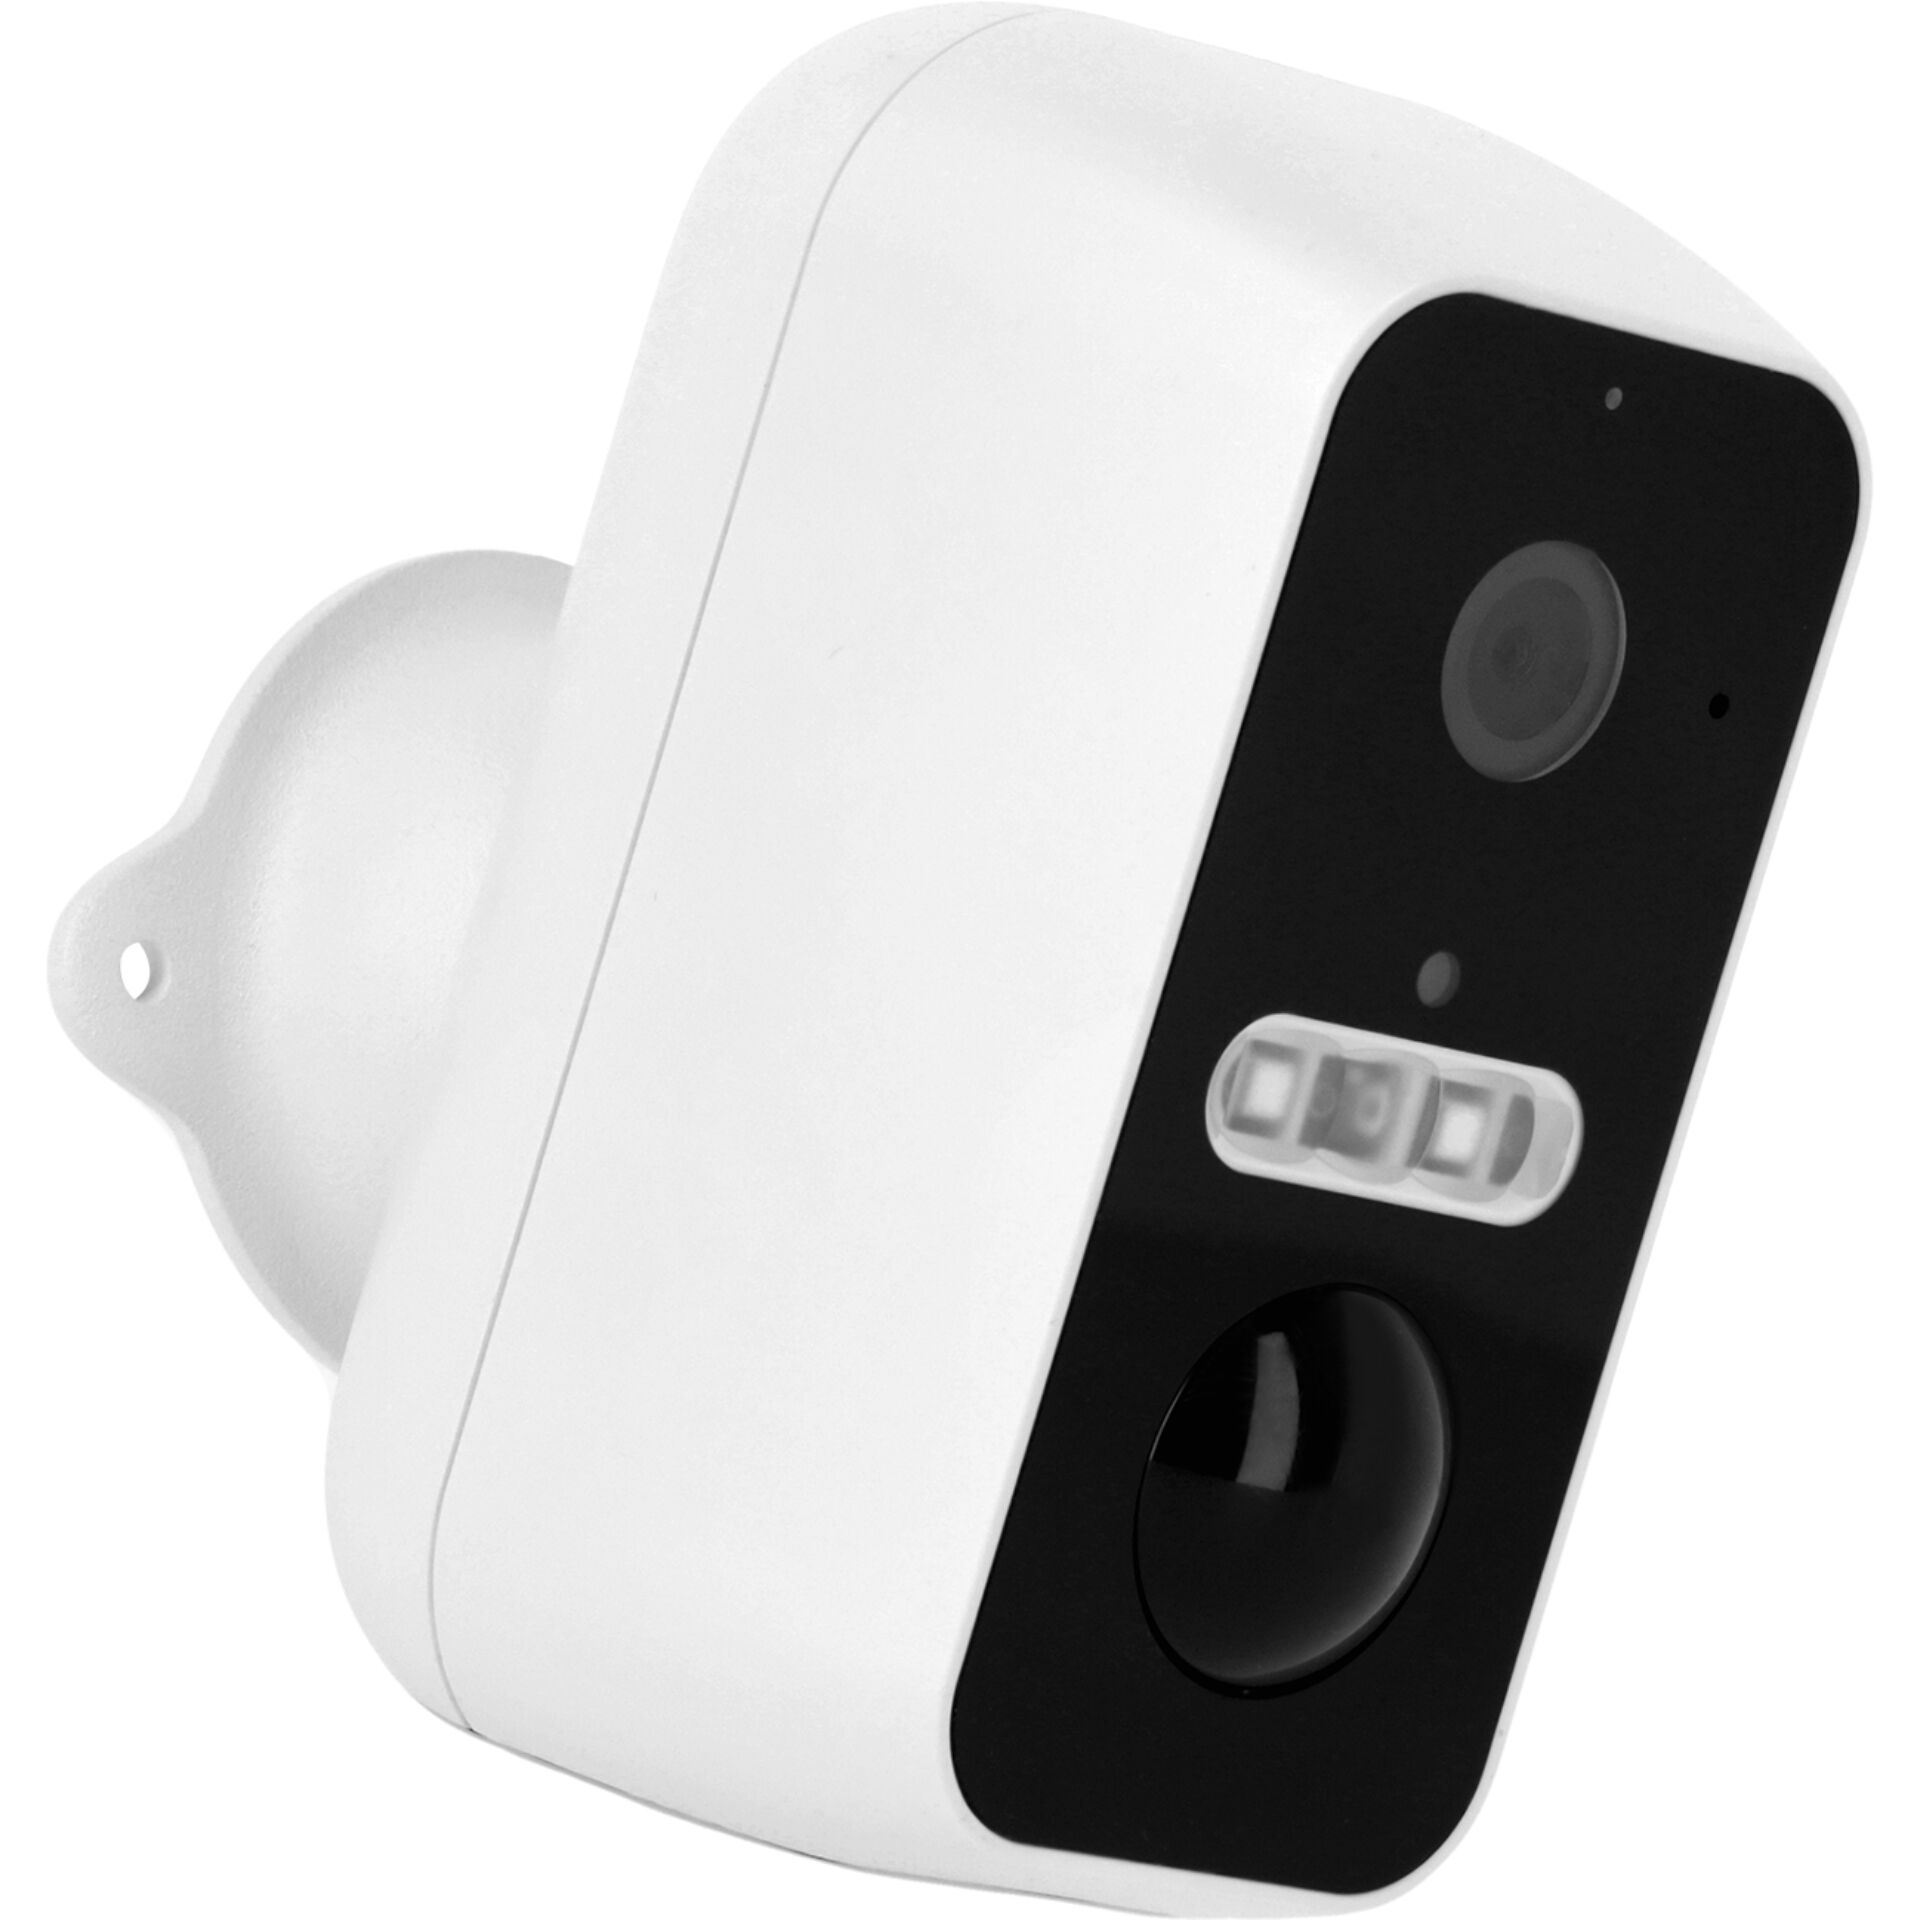 Rollei Security Cam 2K wireless